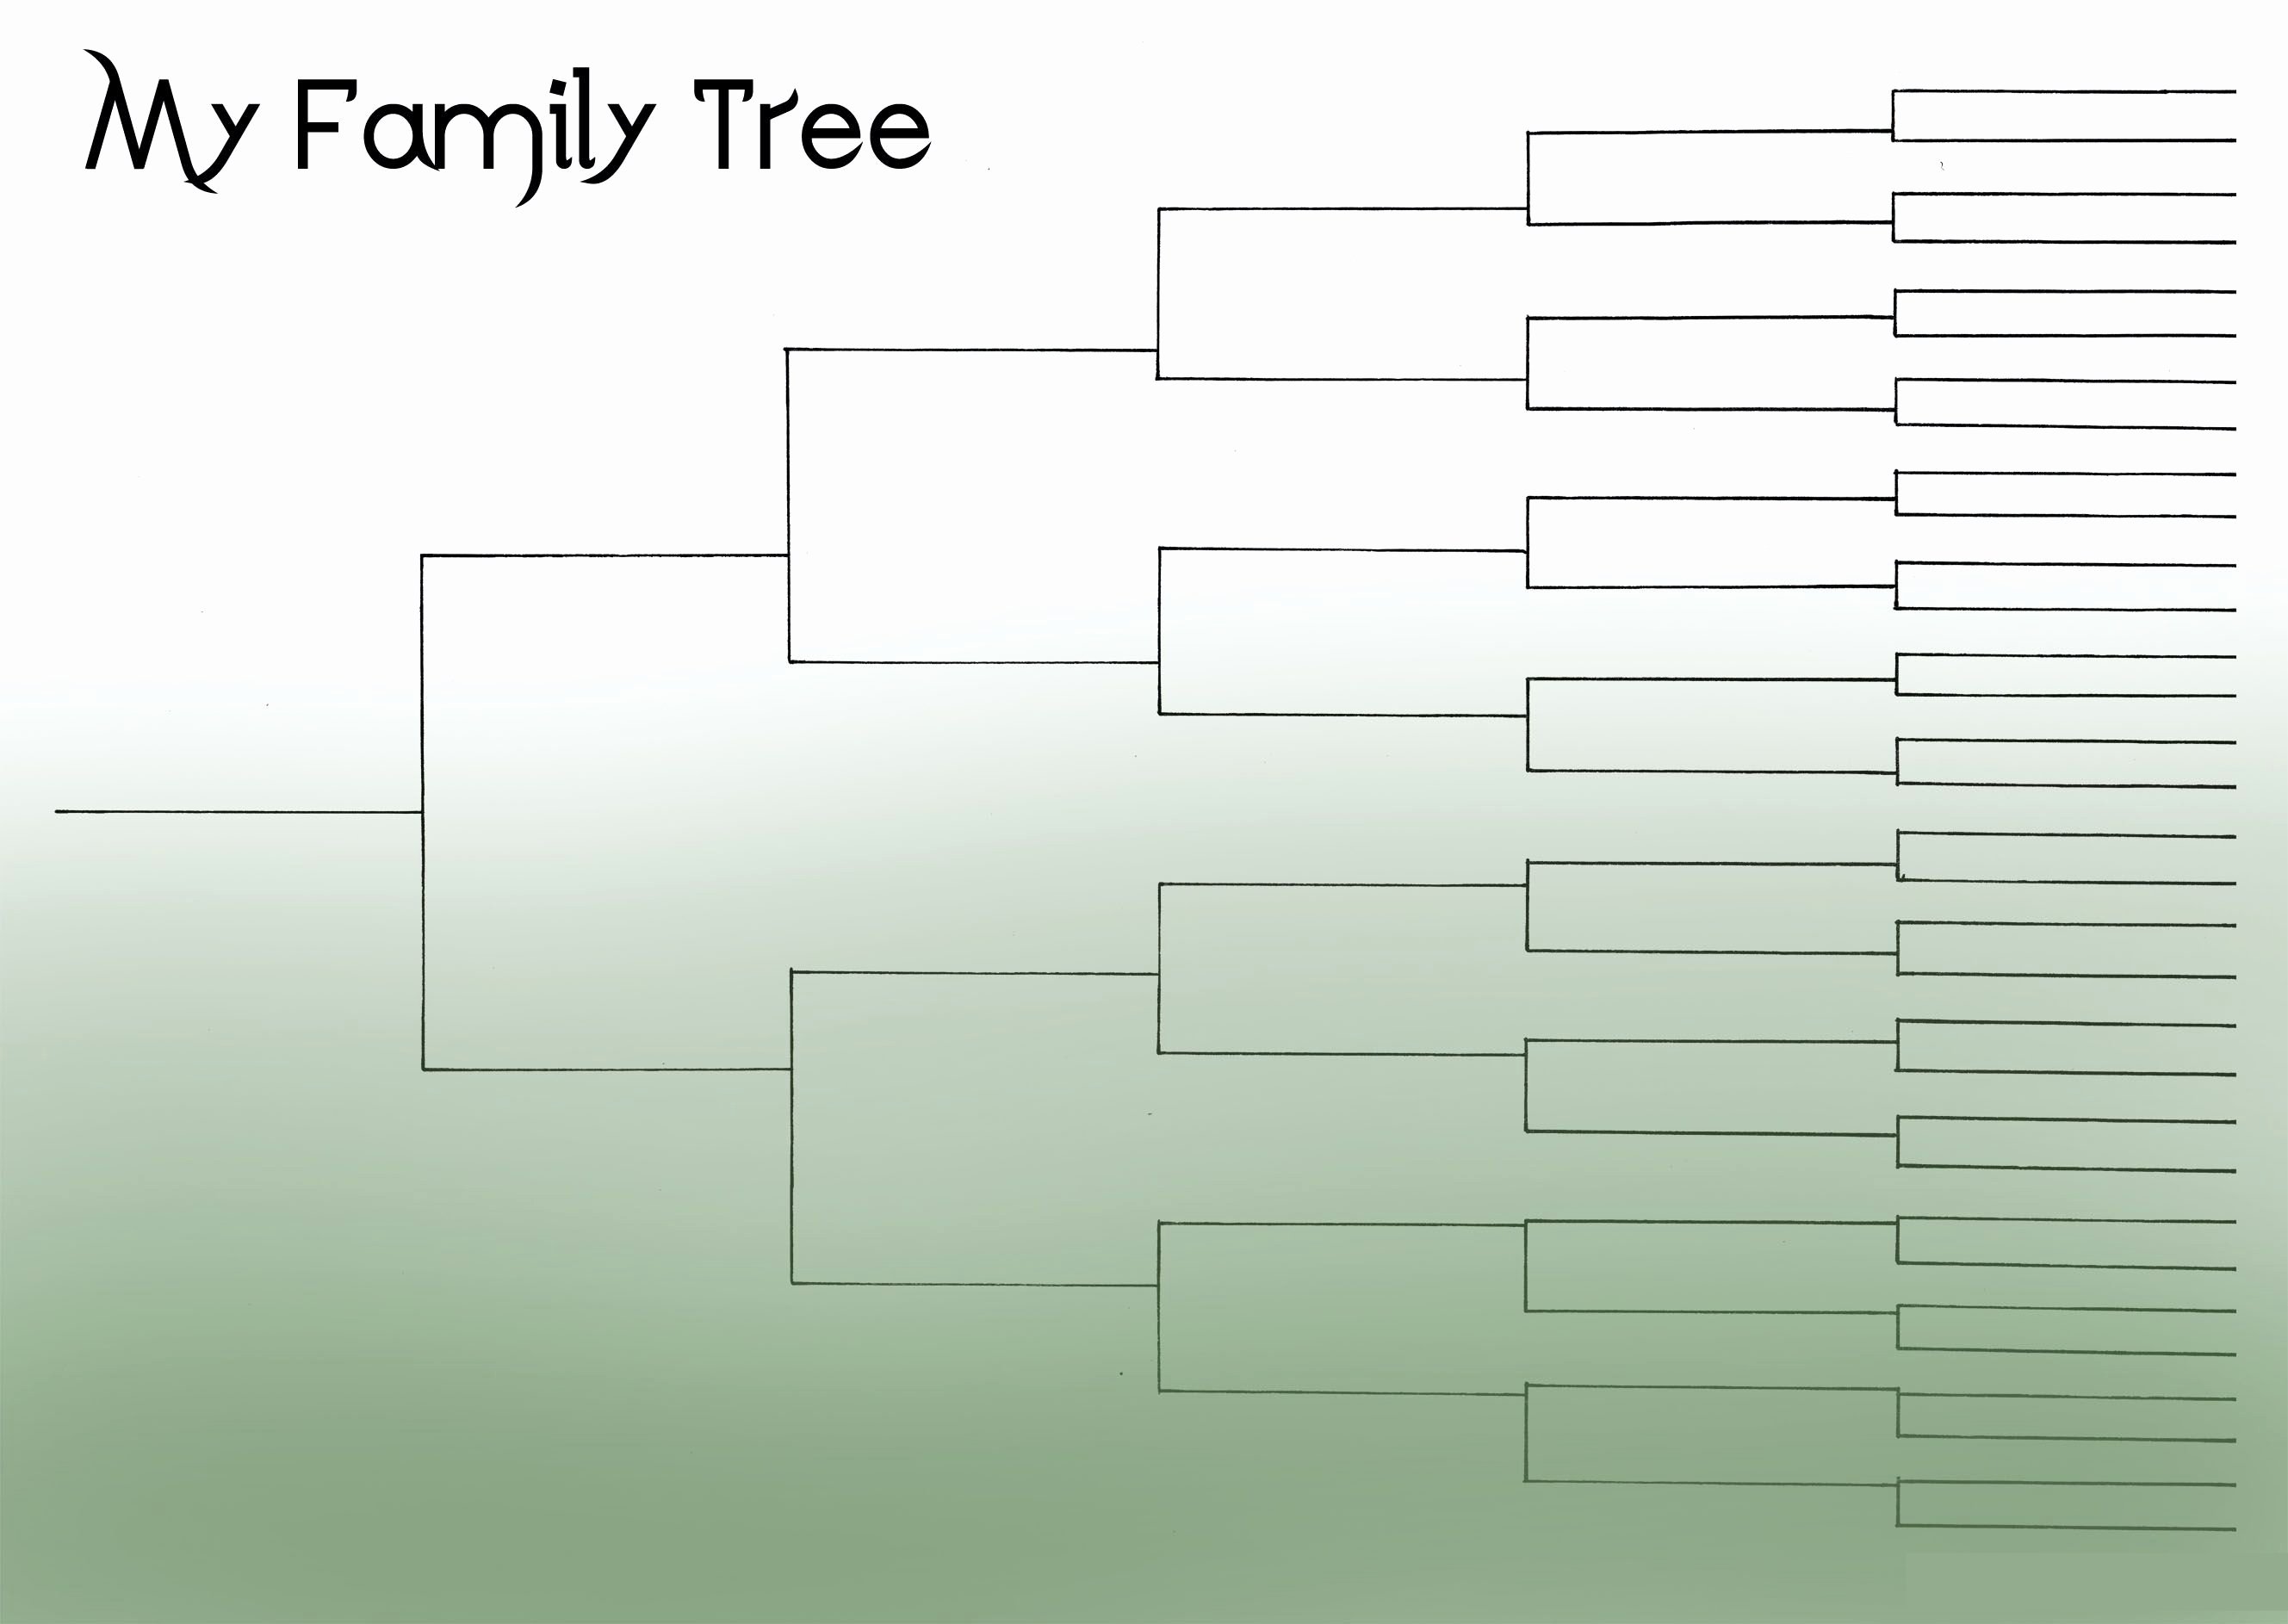 Family Tree Template Editable Elegant Free Editable Family Tree Template Daily Roabox